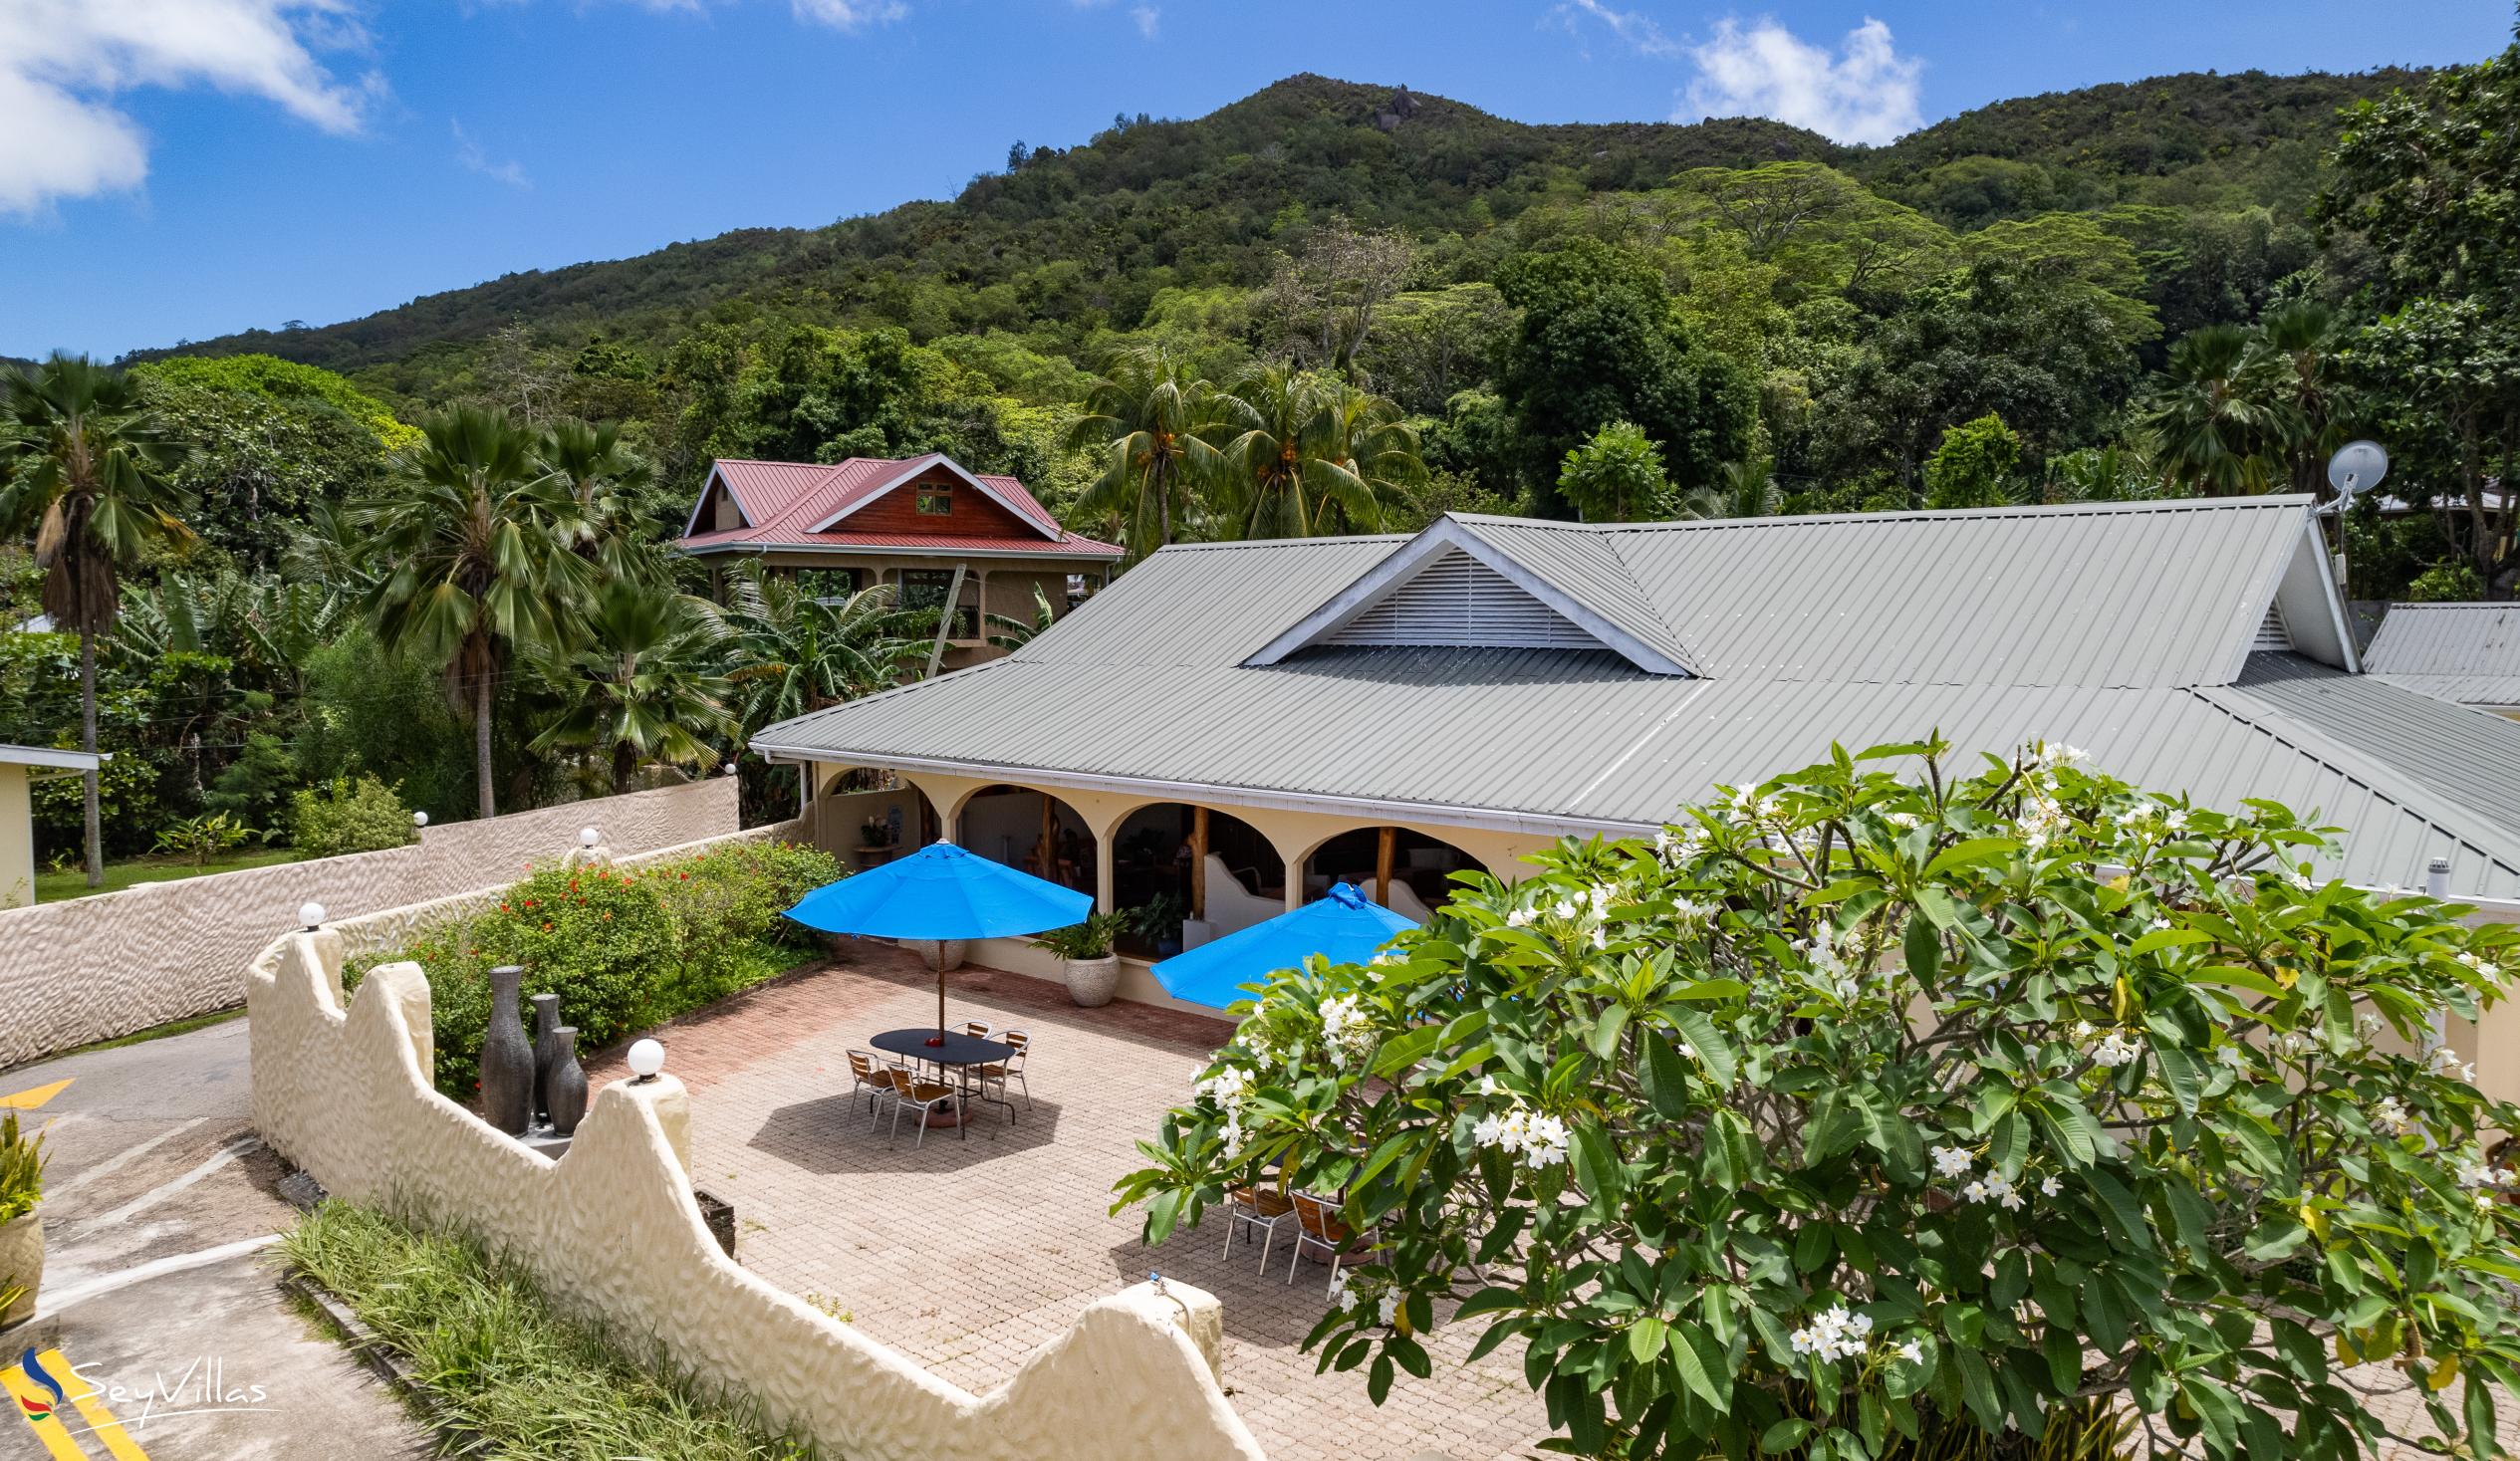 Photo 13: Britannia Hotel - Outdoor area - Praslin (Seychelles)